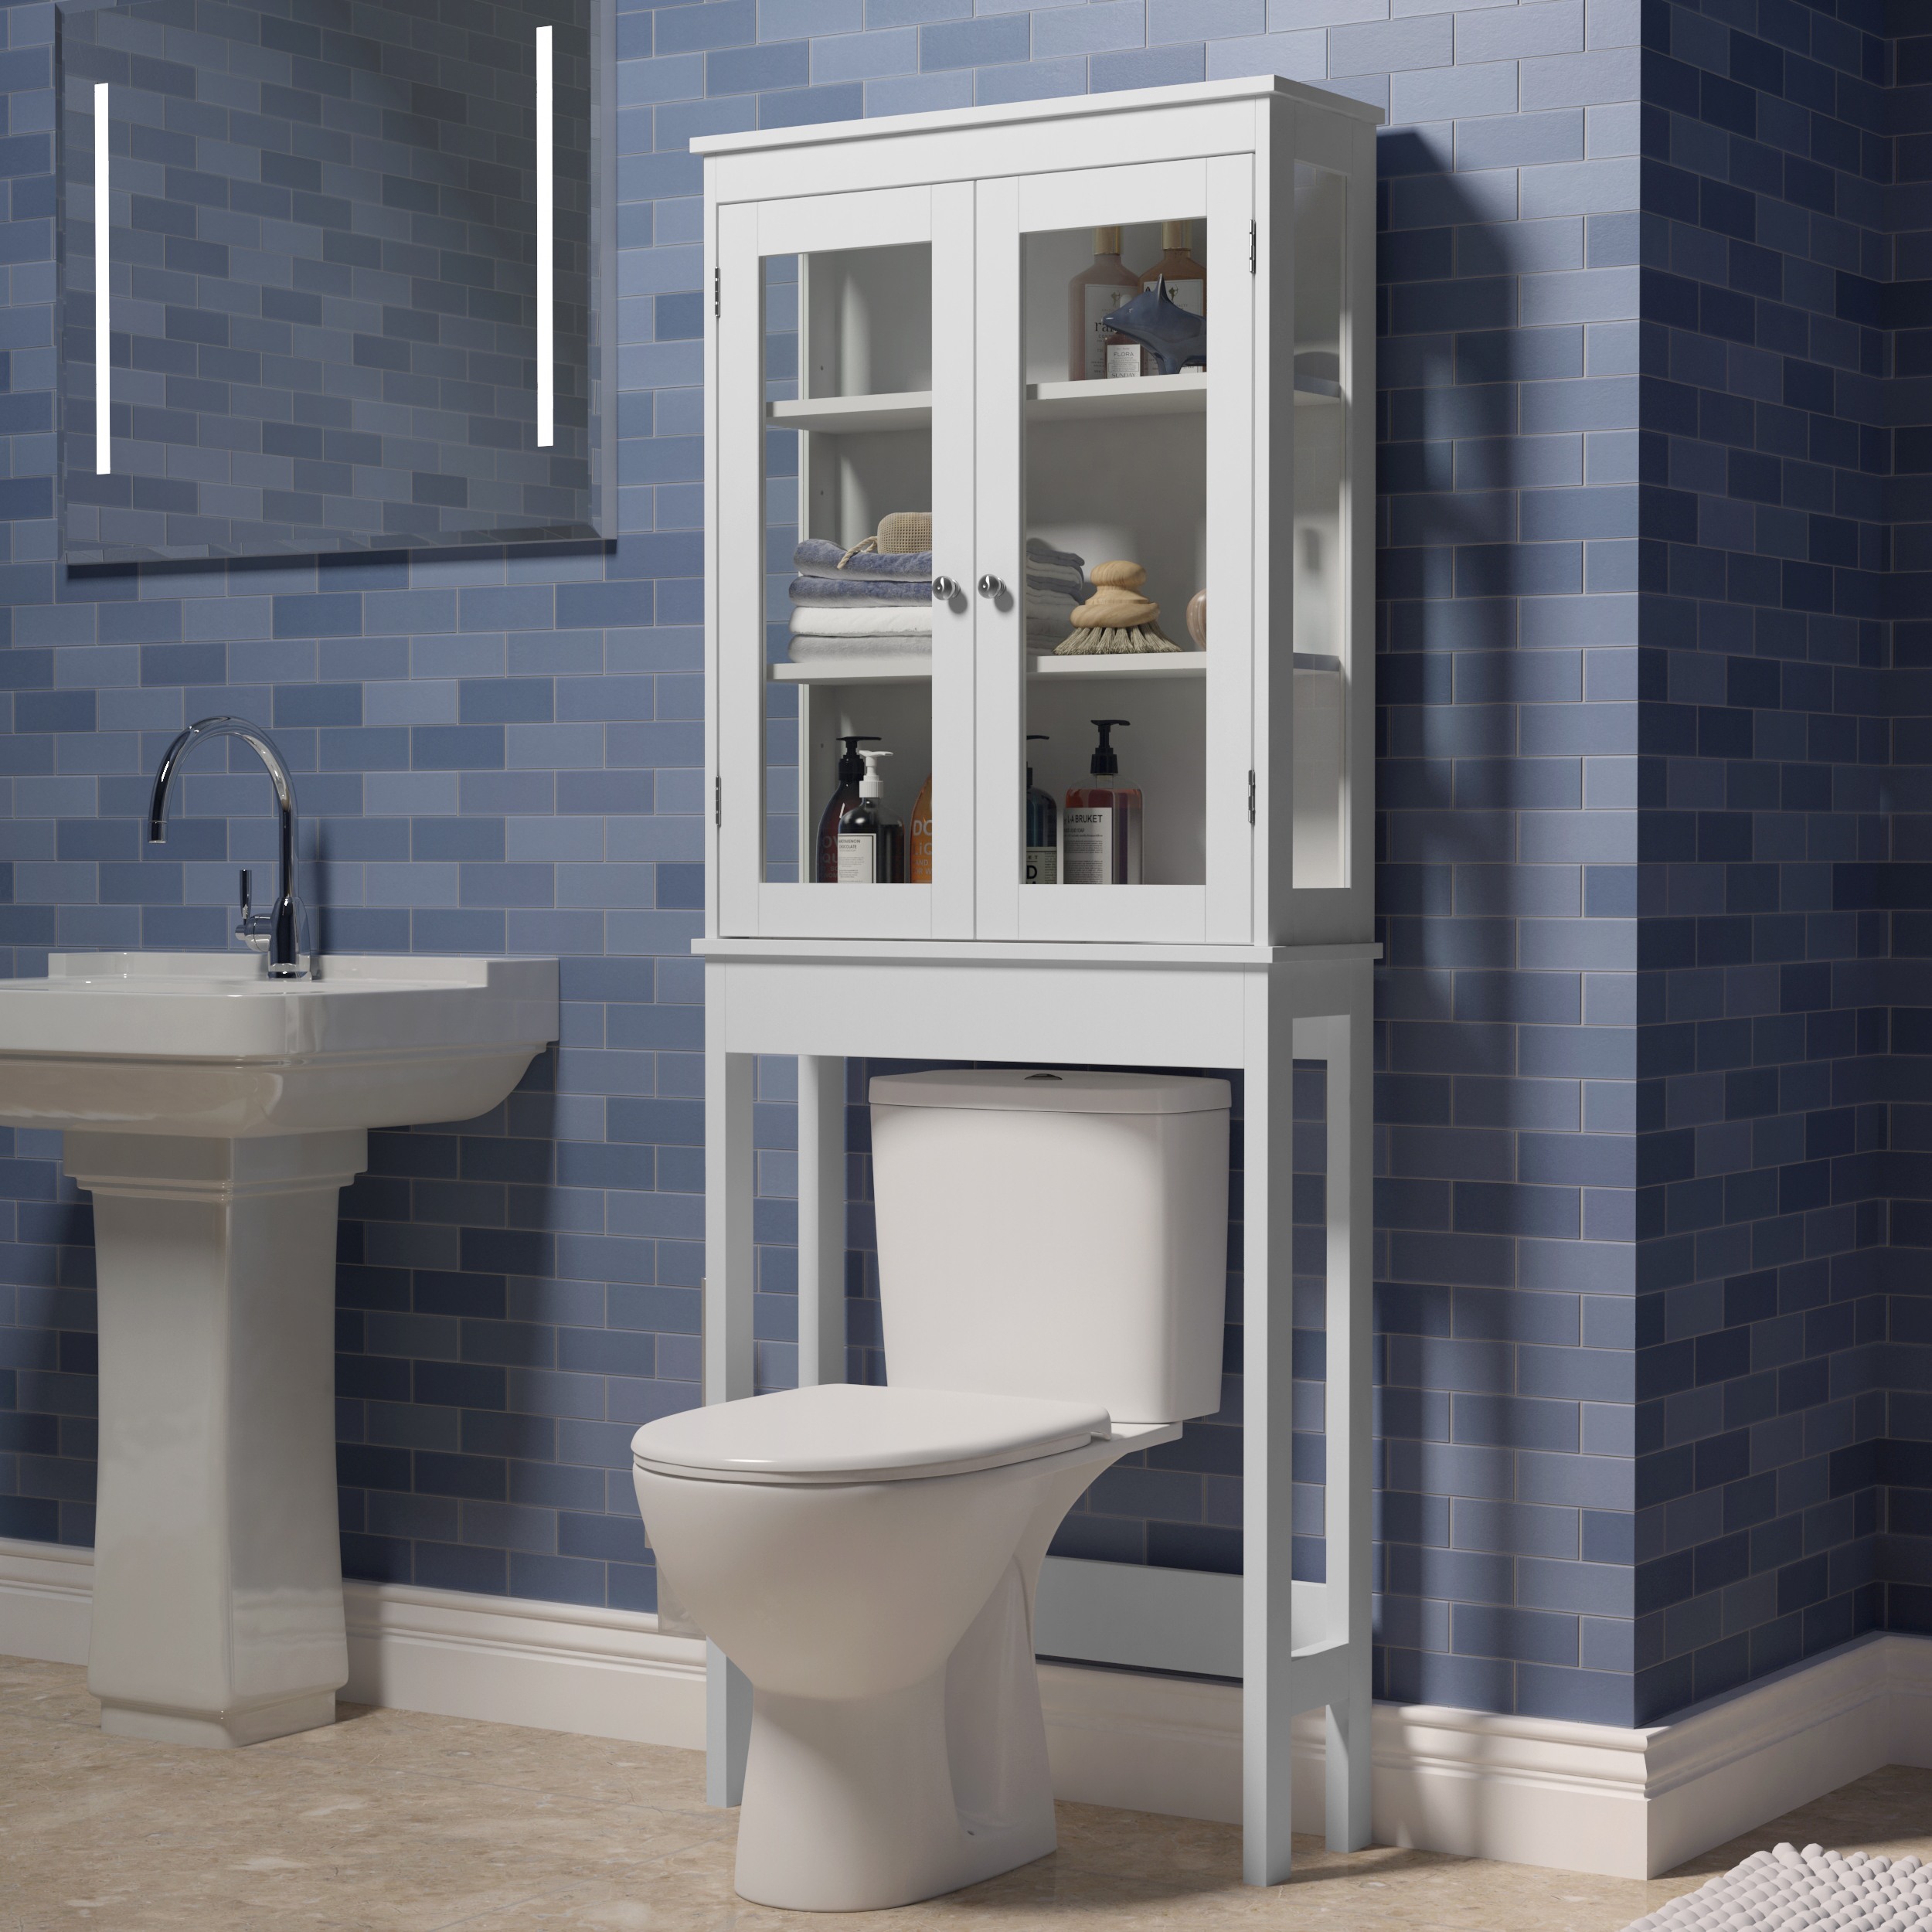 6622165cm-Over-the-Toilet-Storage-Cabinet-Bathroom-Shelves-Organizer-Space-Saver-Bath-Rack-1614005-8